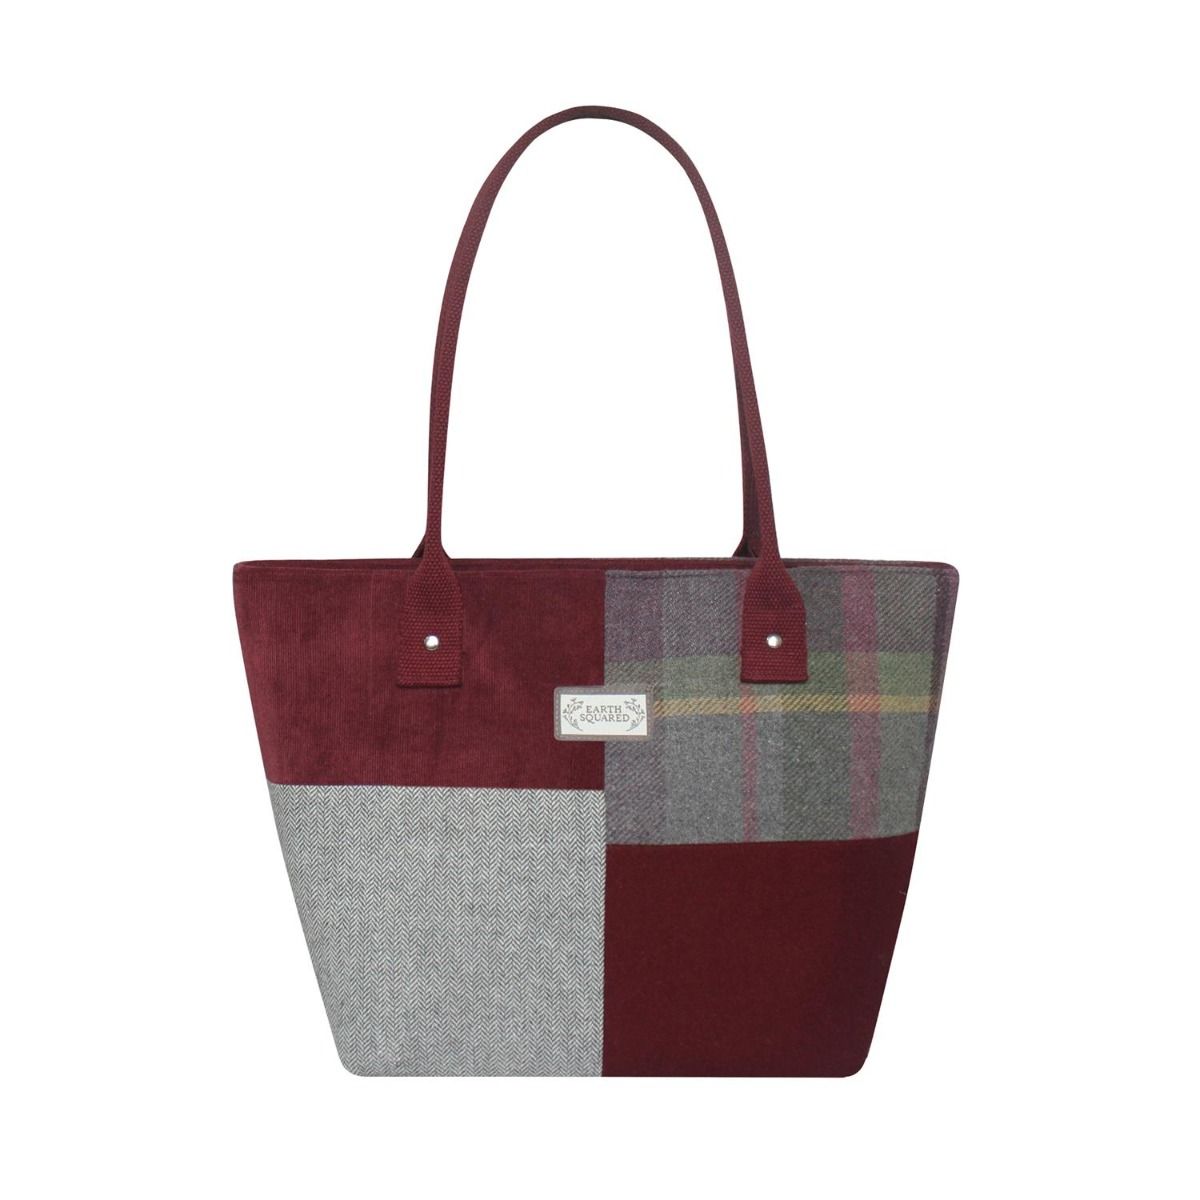 Gullane Tweed Tote Bag - The Nancy Smillie Shop - Art, Jewellery & Designer Gifts Glasgow